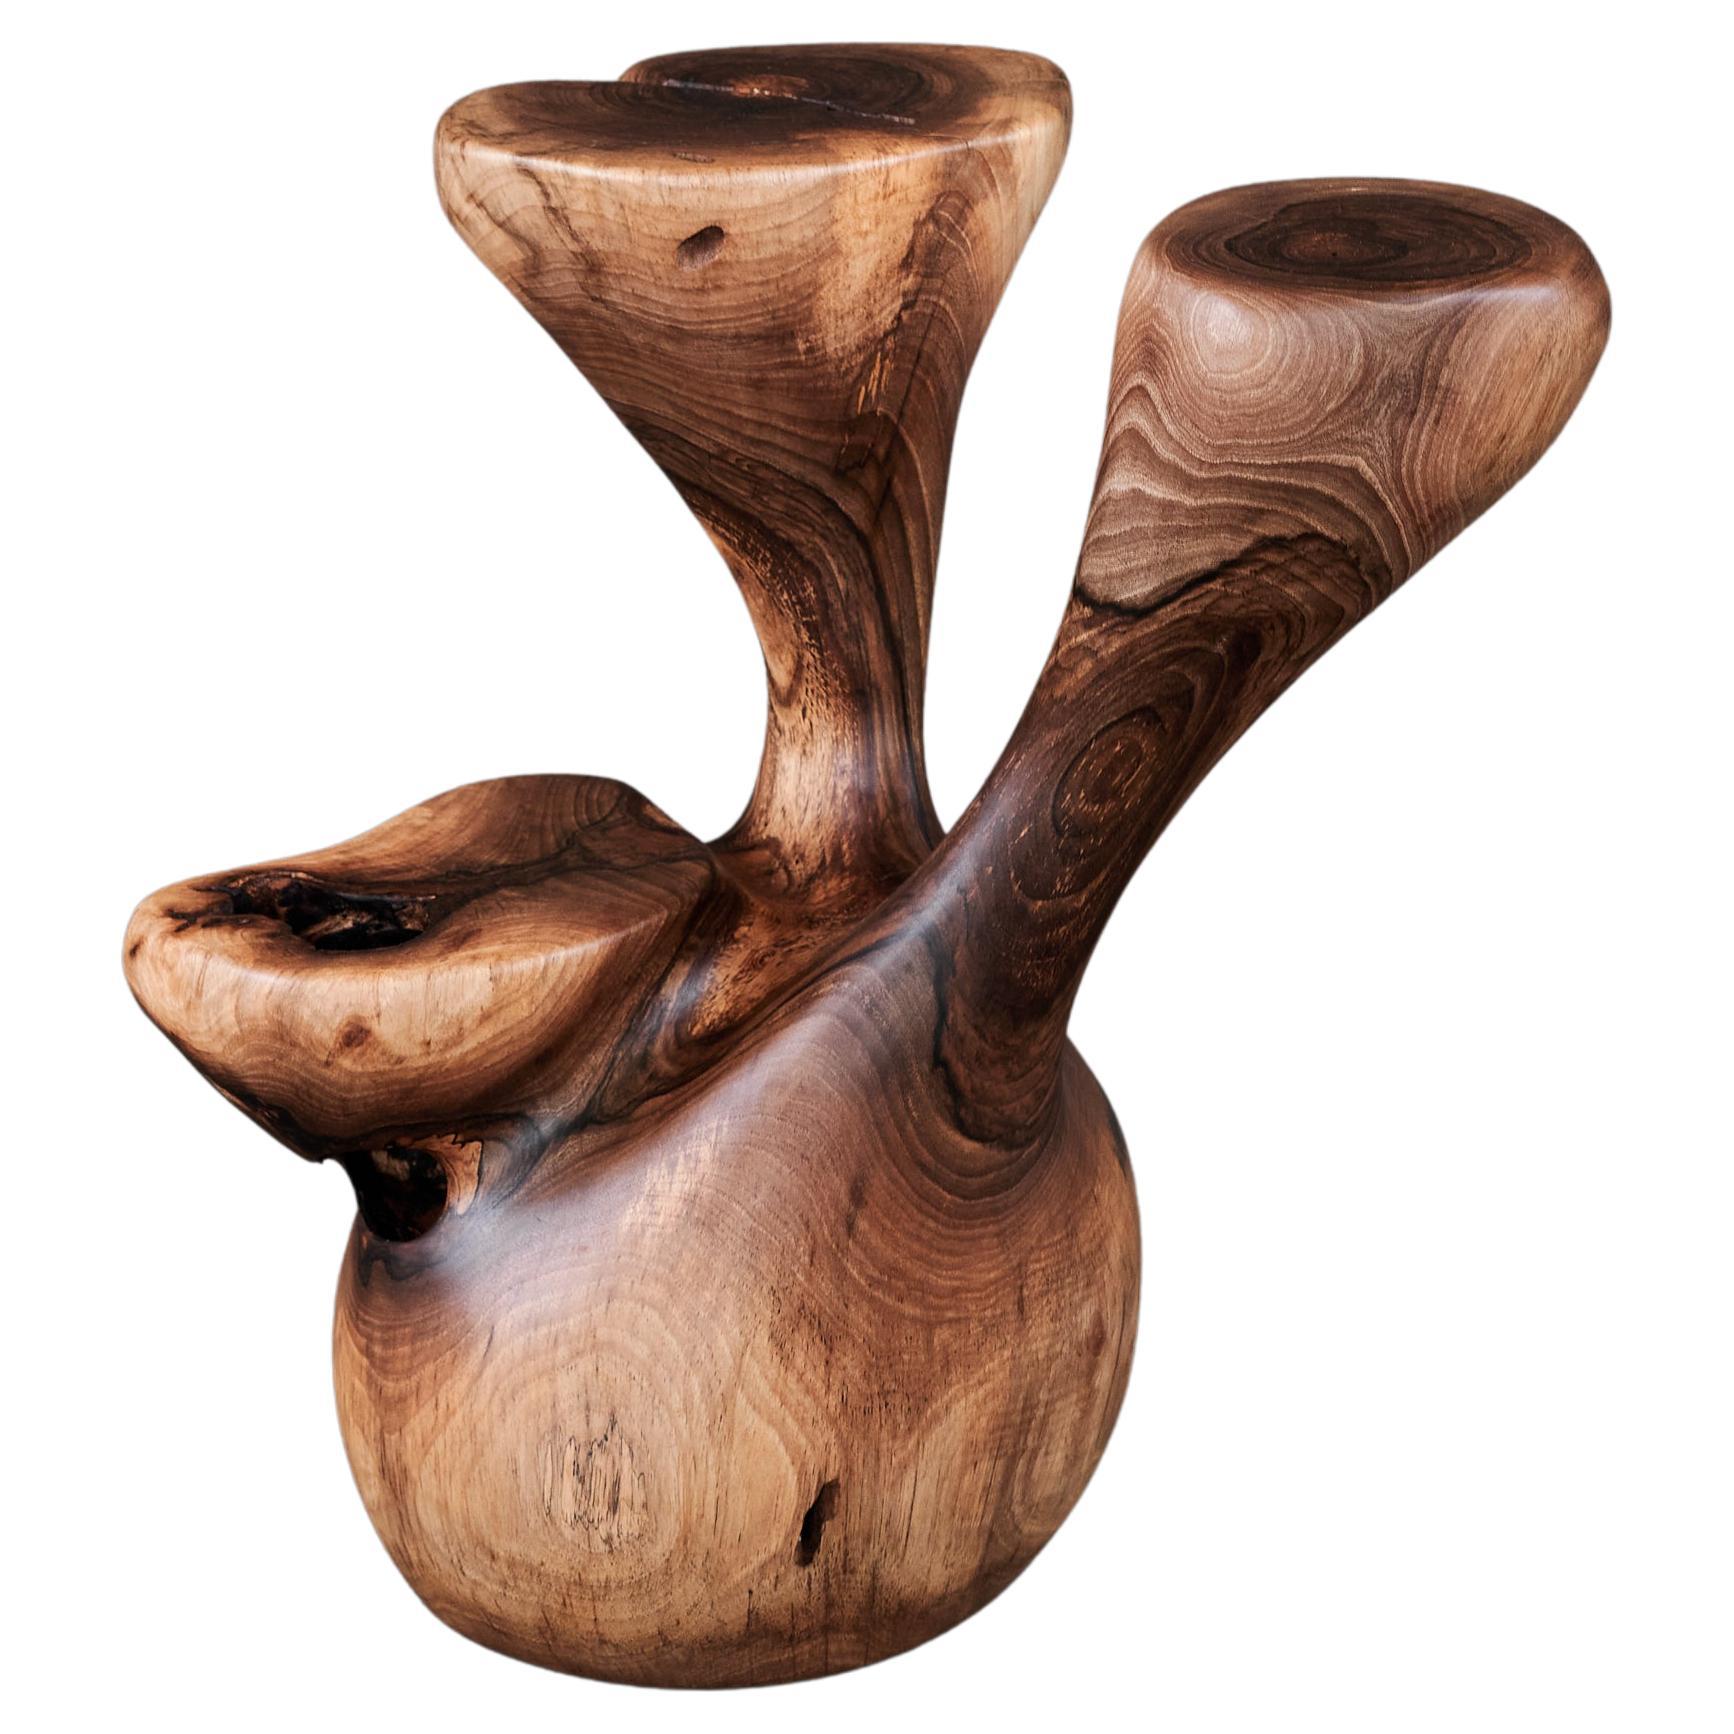 Solid Wood Sculptural Side Table, Original Contemporary Design, Logniture For Sale